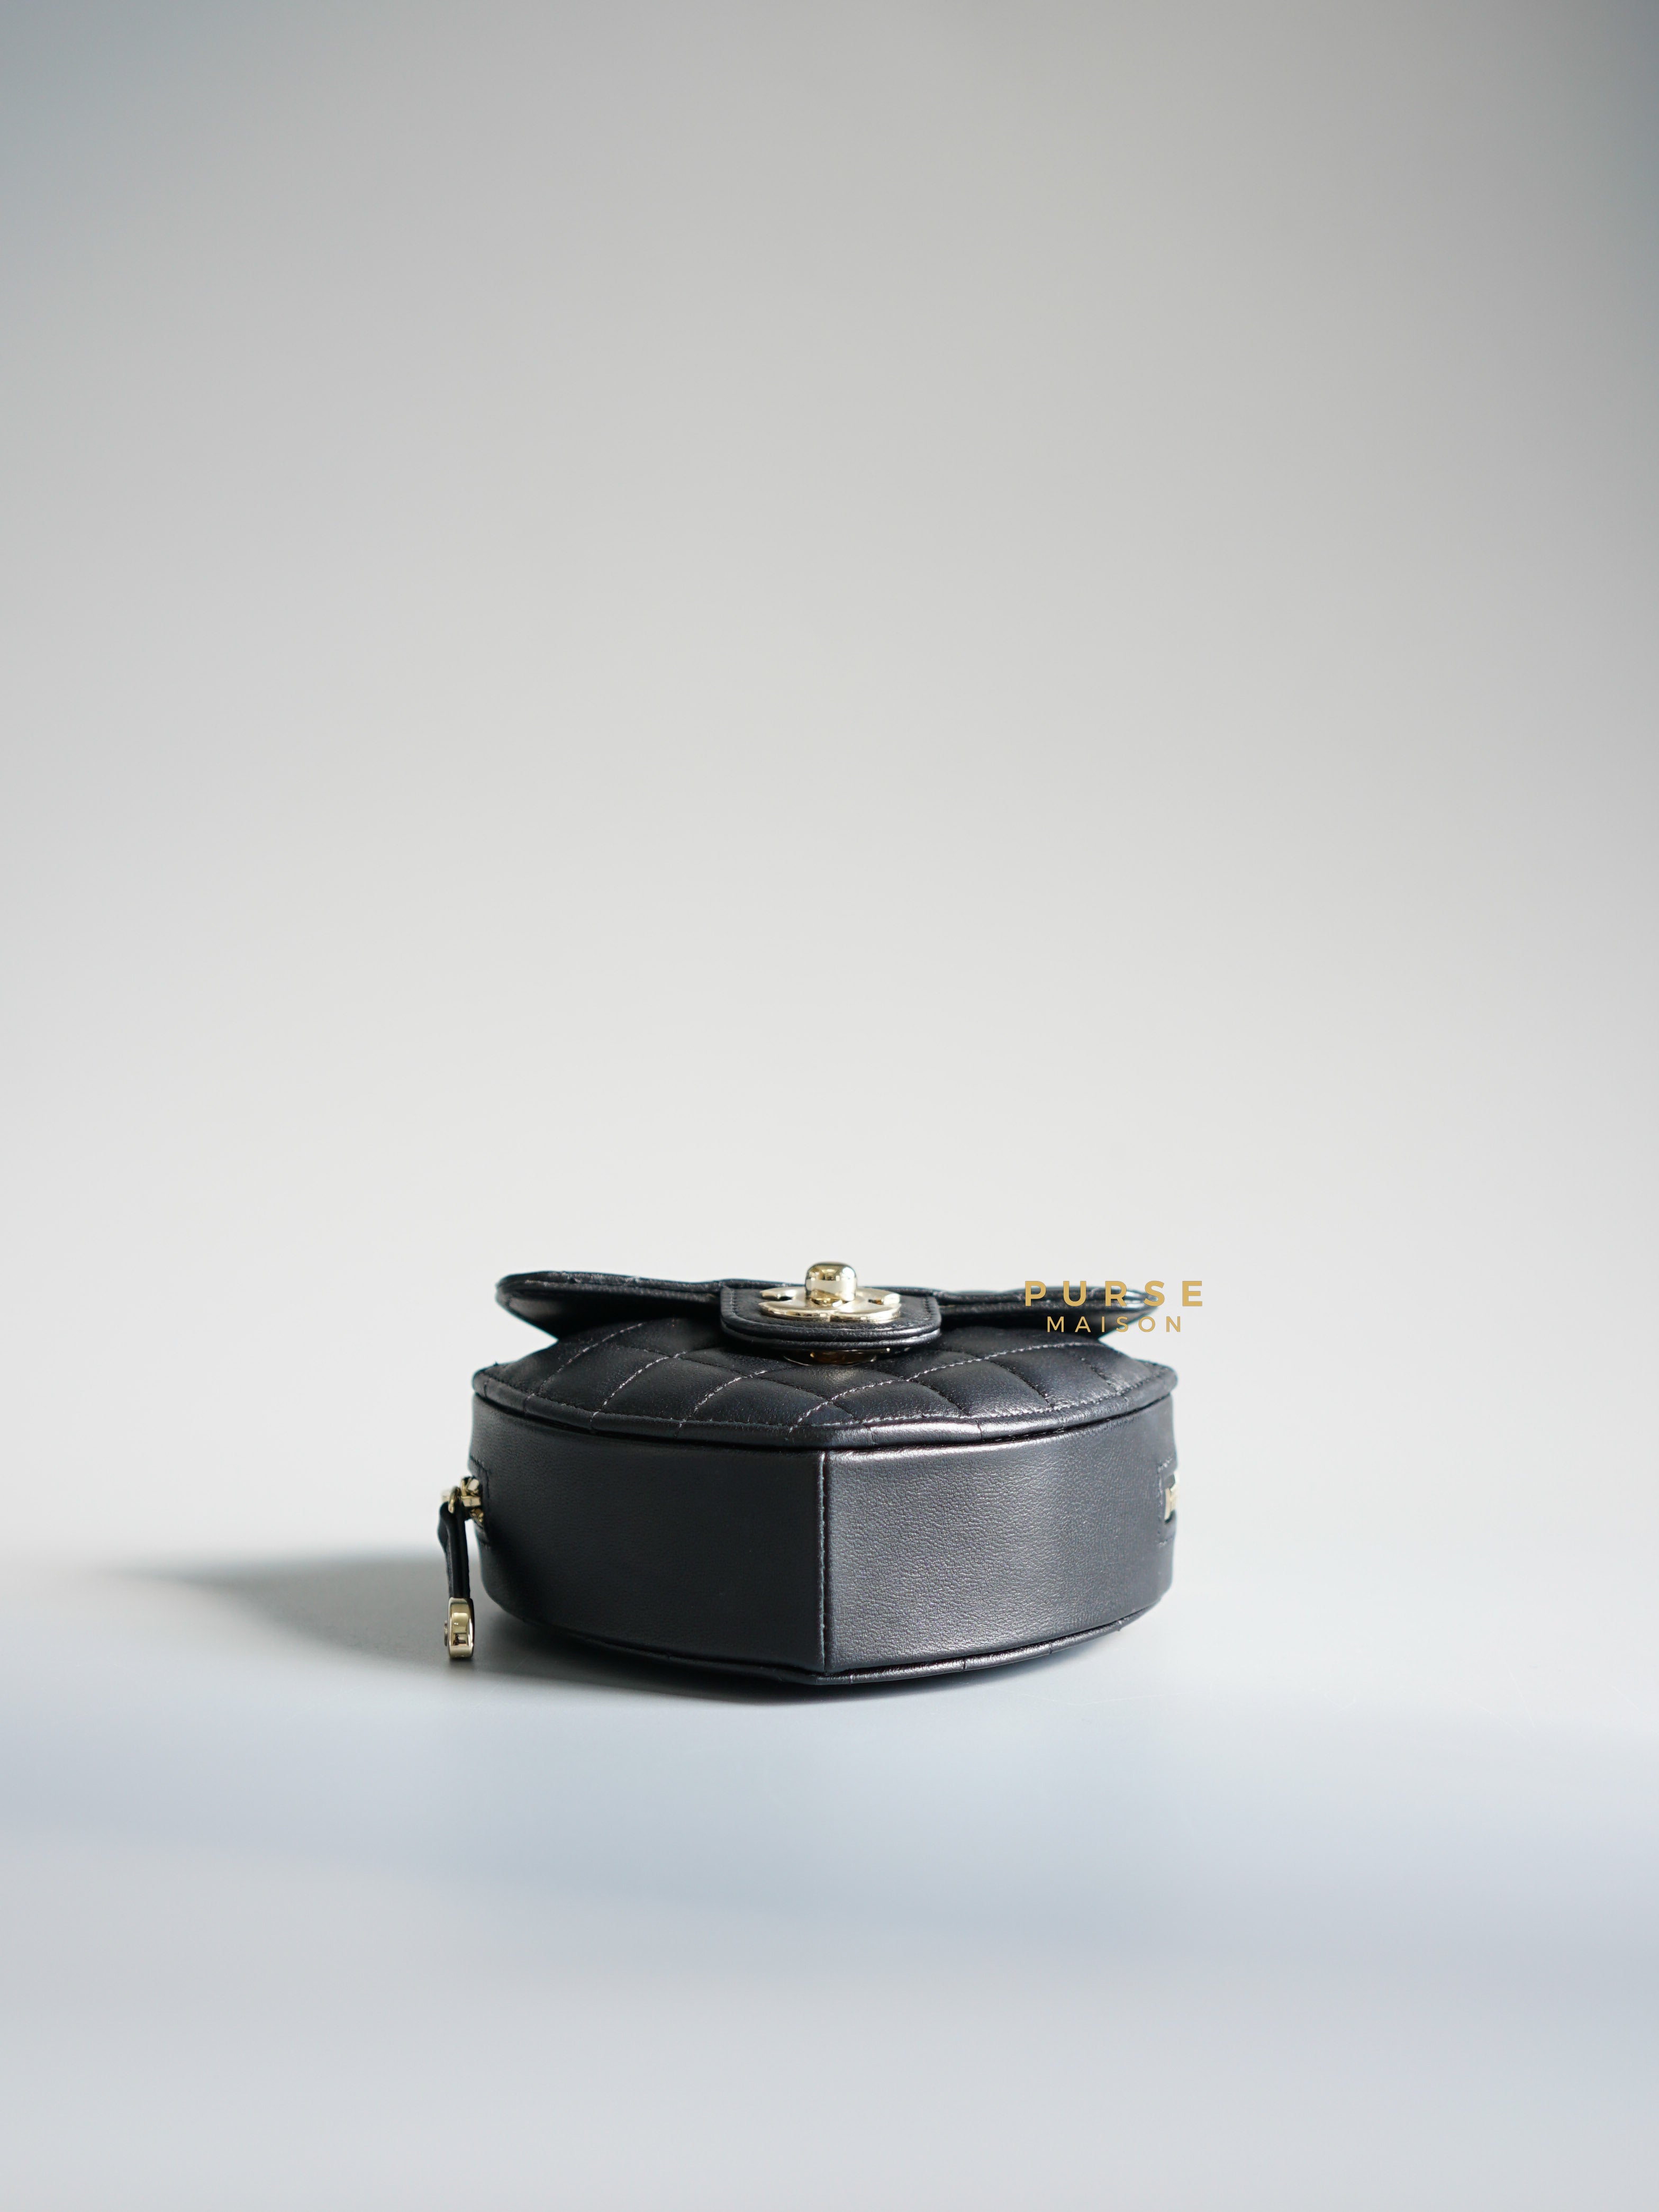 Chanel 22s Small Heart Clutch Bag in Black Lambskin Gold Hardware Series 32 | Purse Maison Luxury Bags Shop